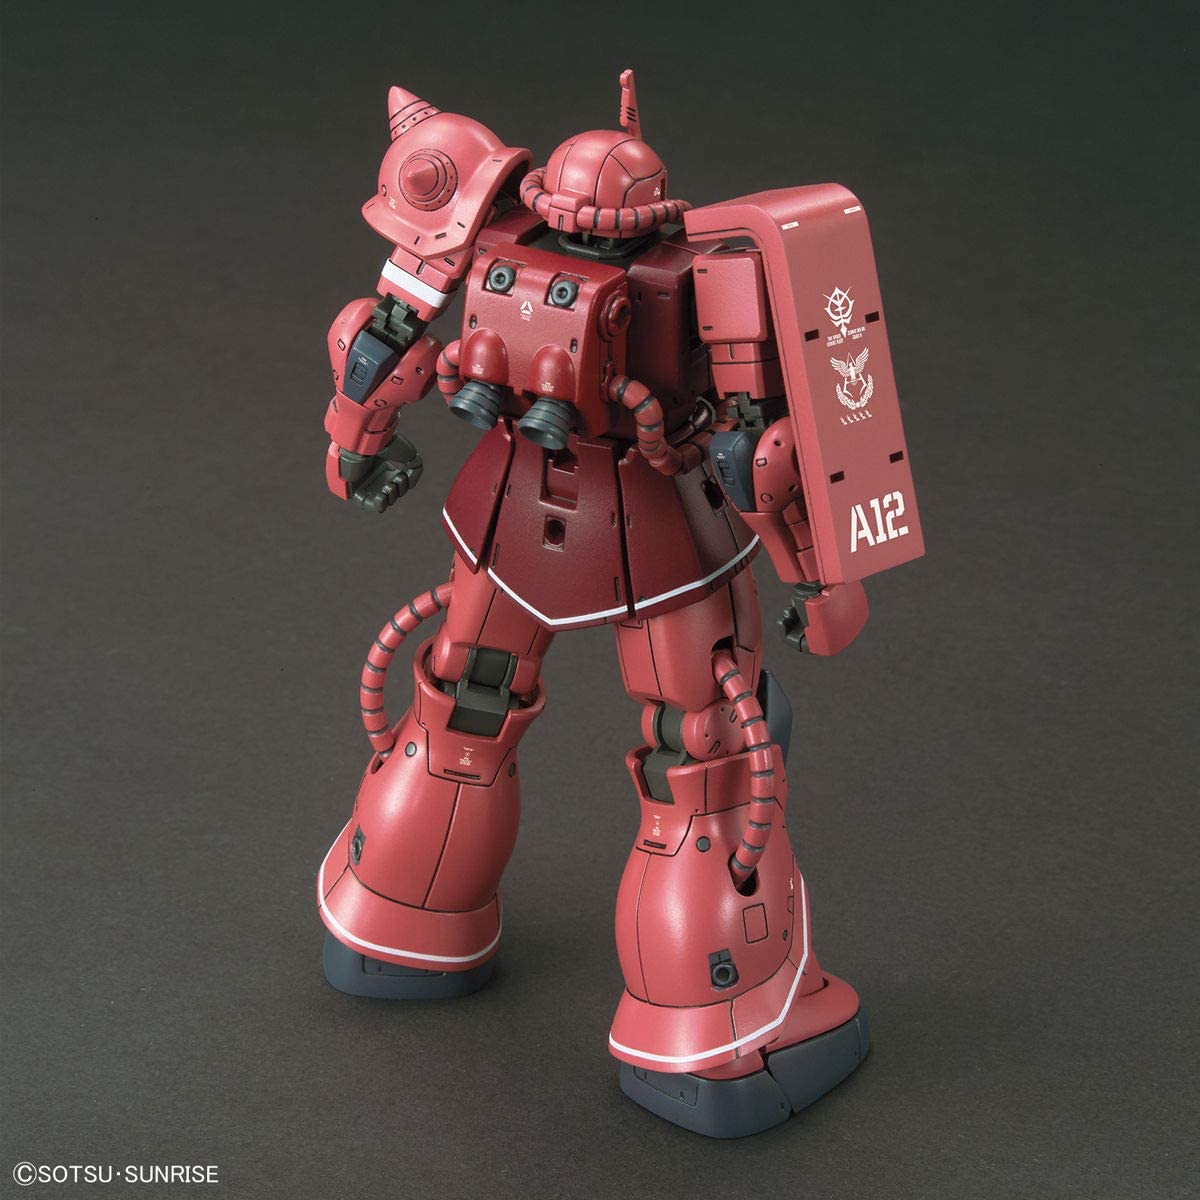 HG Mobile Suit Gundam THE ORIGIN Zaku II Red Comet Ver. 1/144 Scale Color-Coded Plastic Model | animota